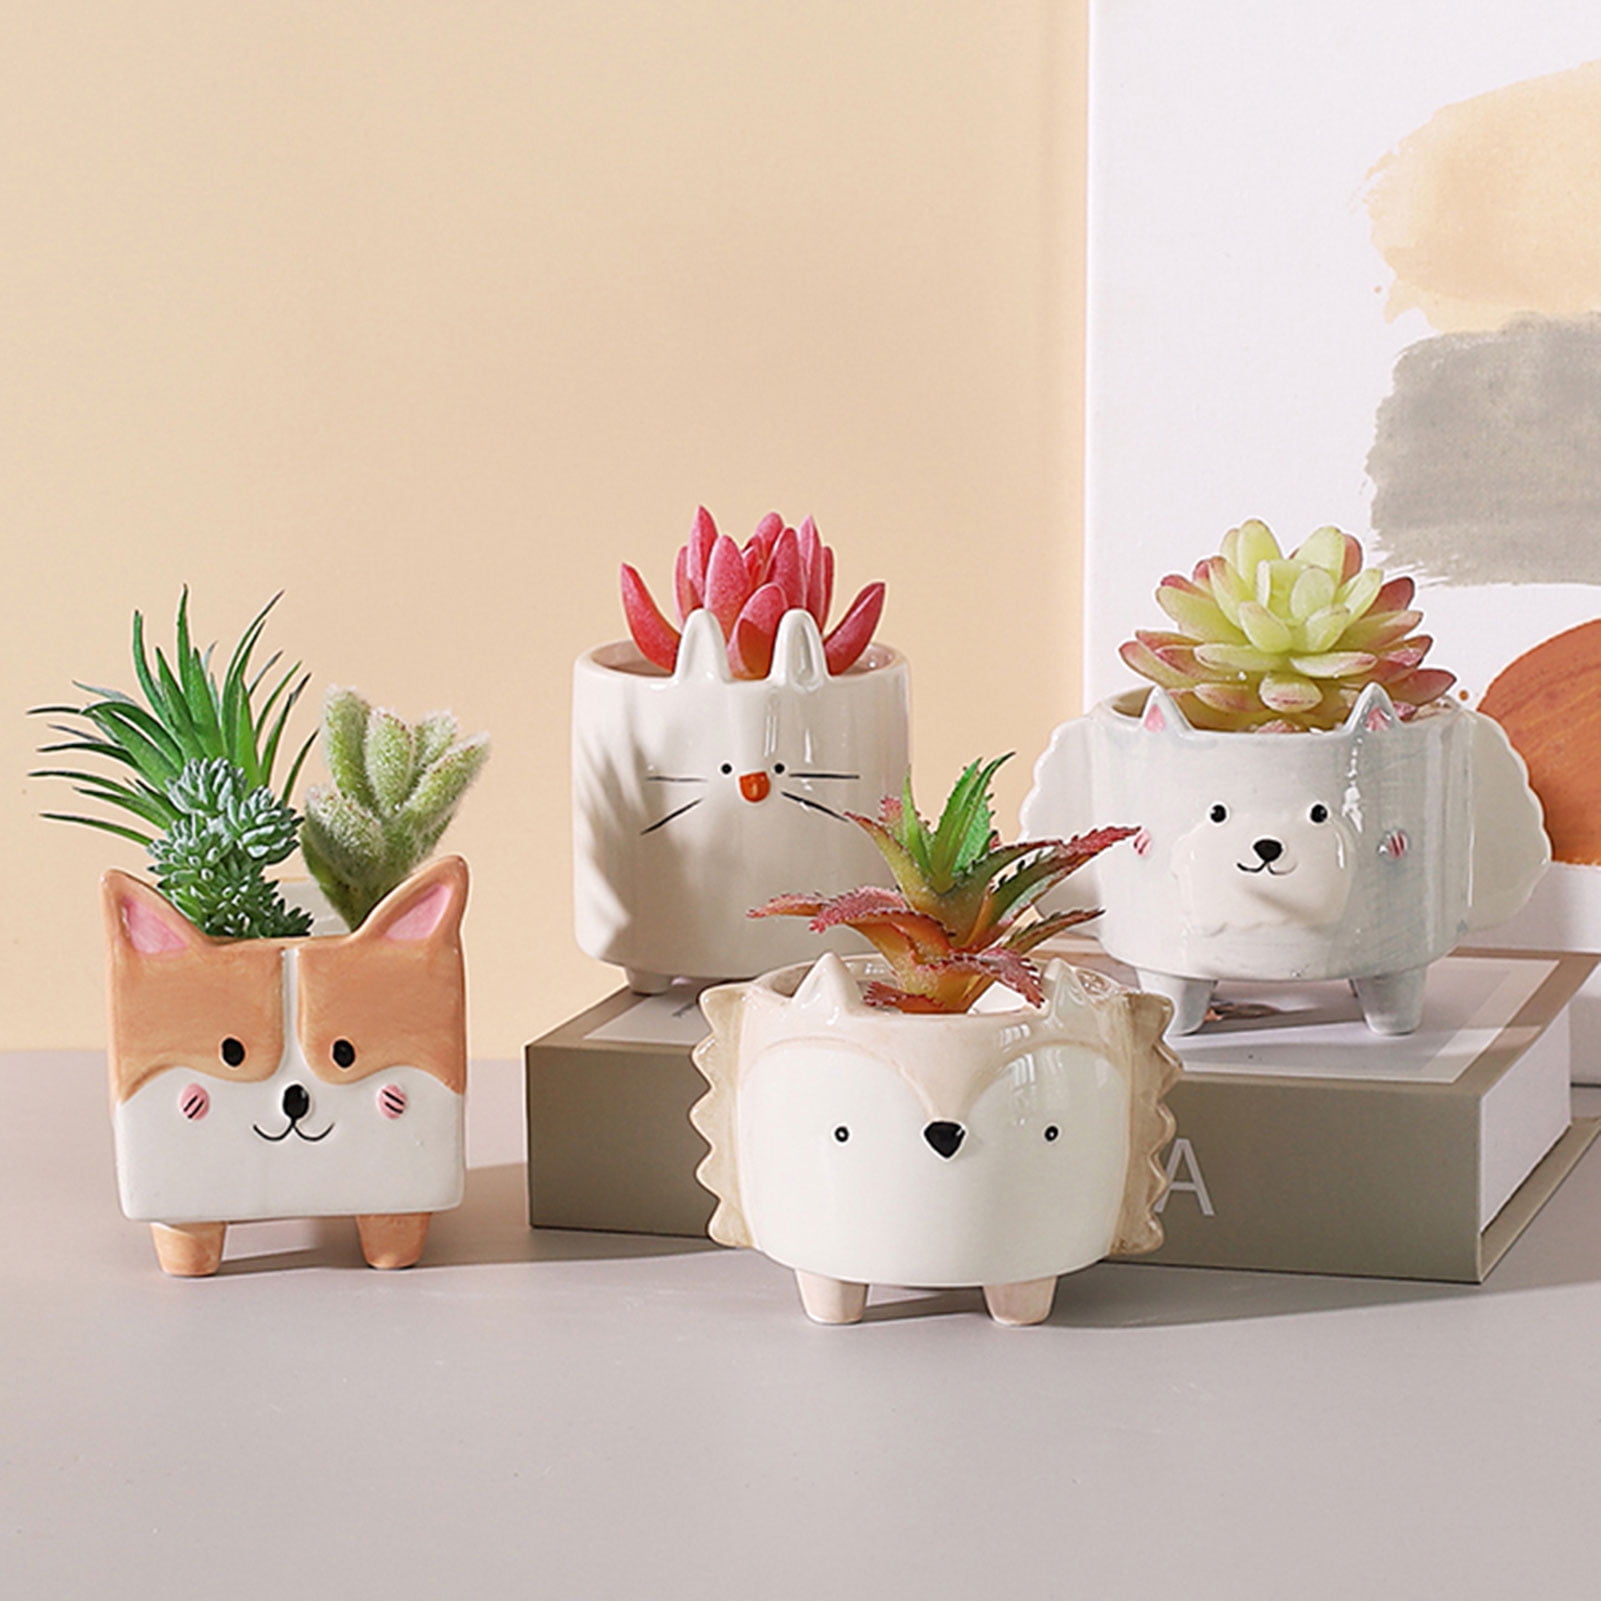 Kucus Cute Cartoon Animal Bunny Shaped Ceramic Succulent Cactus Vase Flower Plant Pot Planter for Home Garden Office Decoration Color: White Bunny